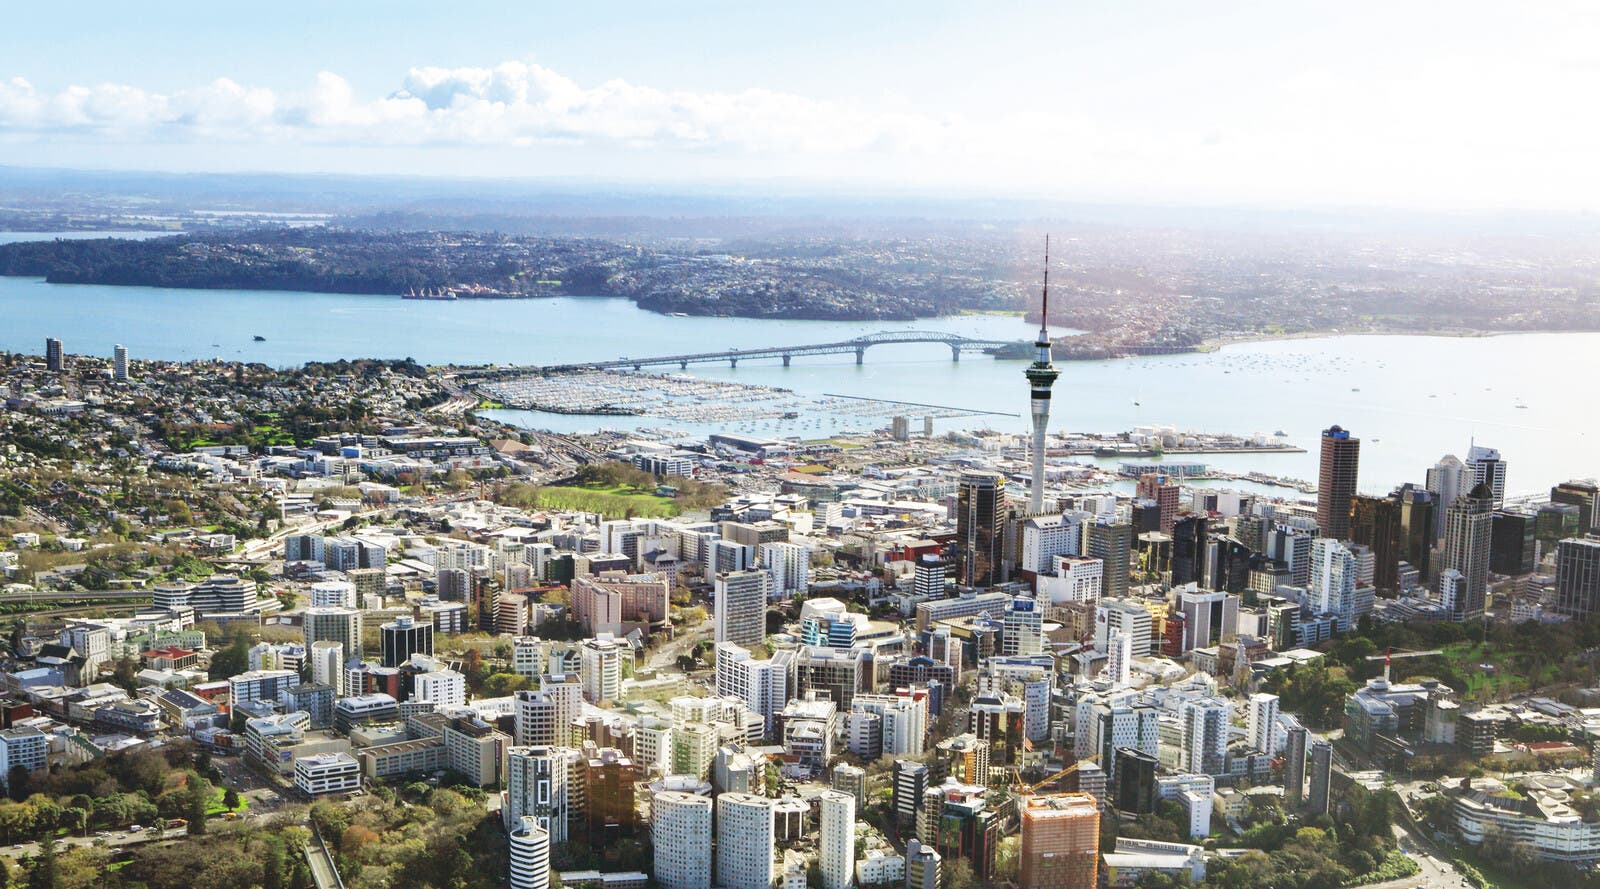 Birds-eye view of buildings in Auckland